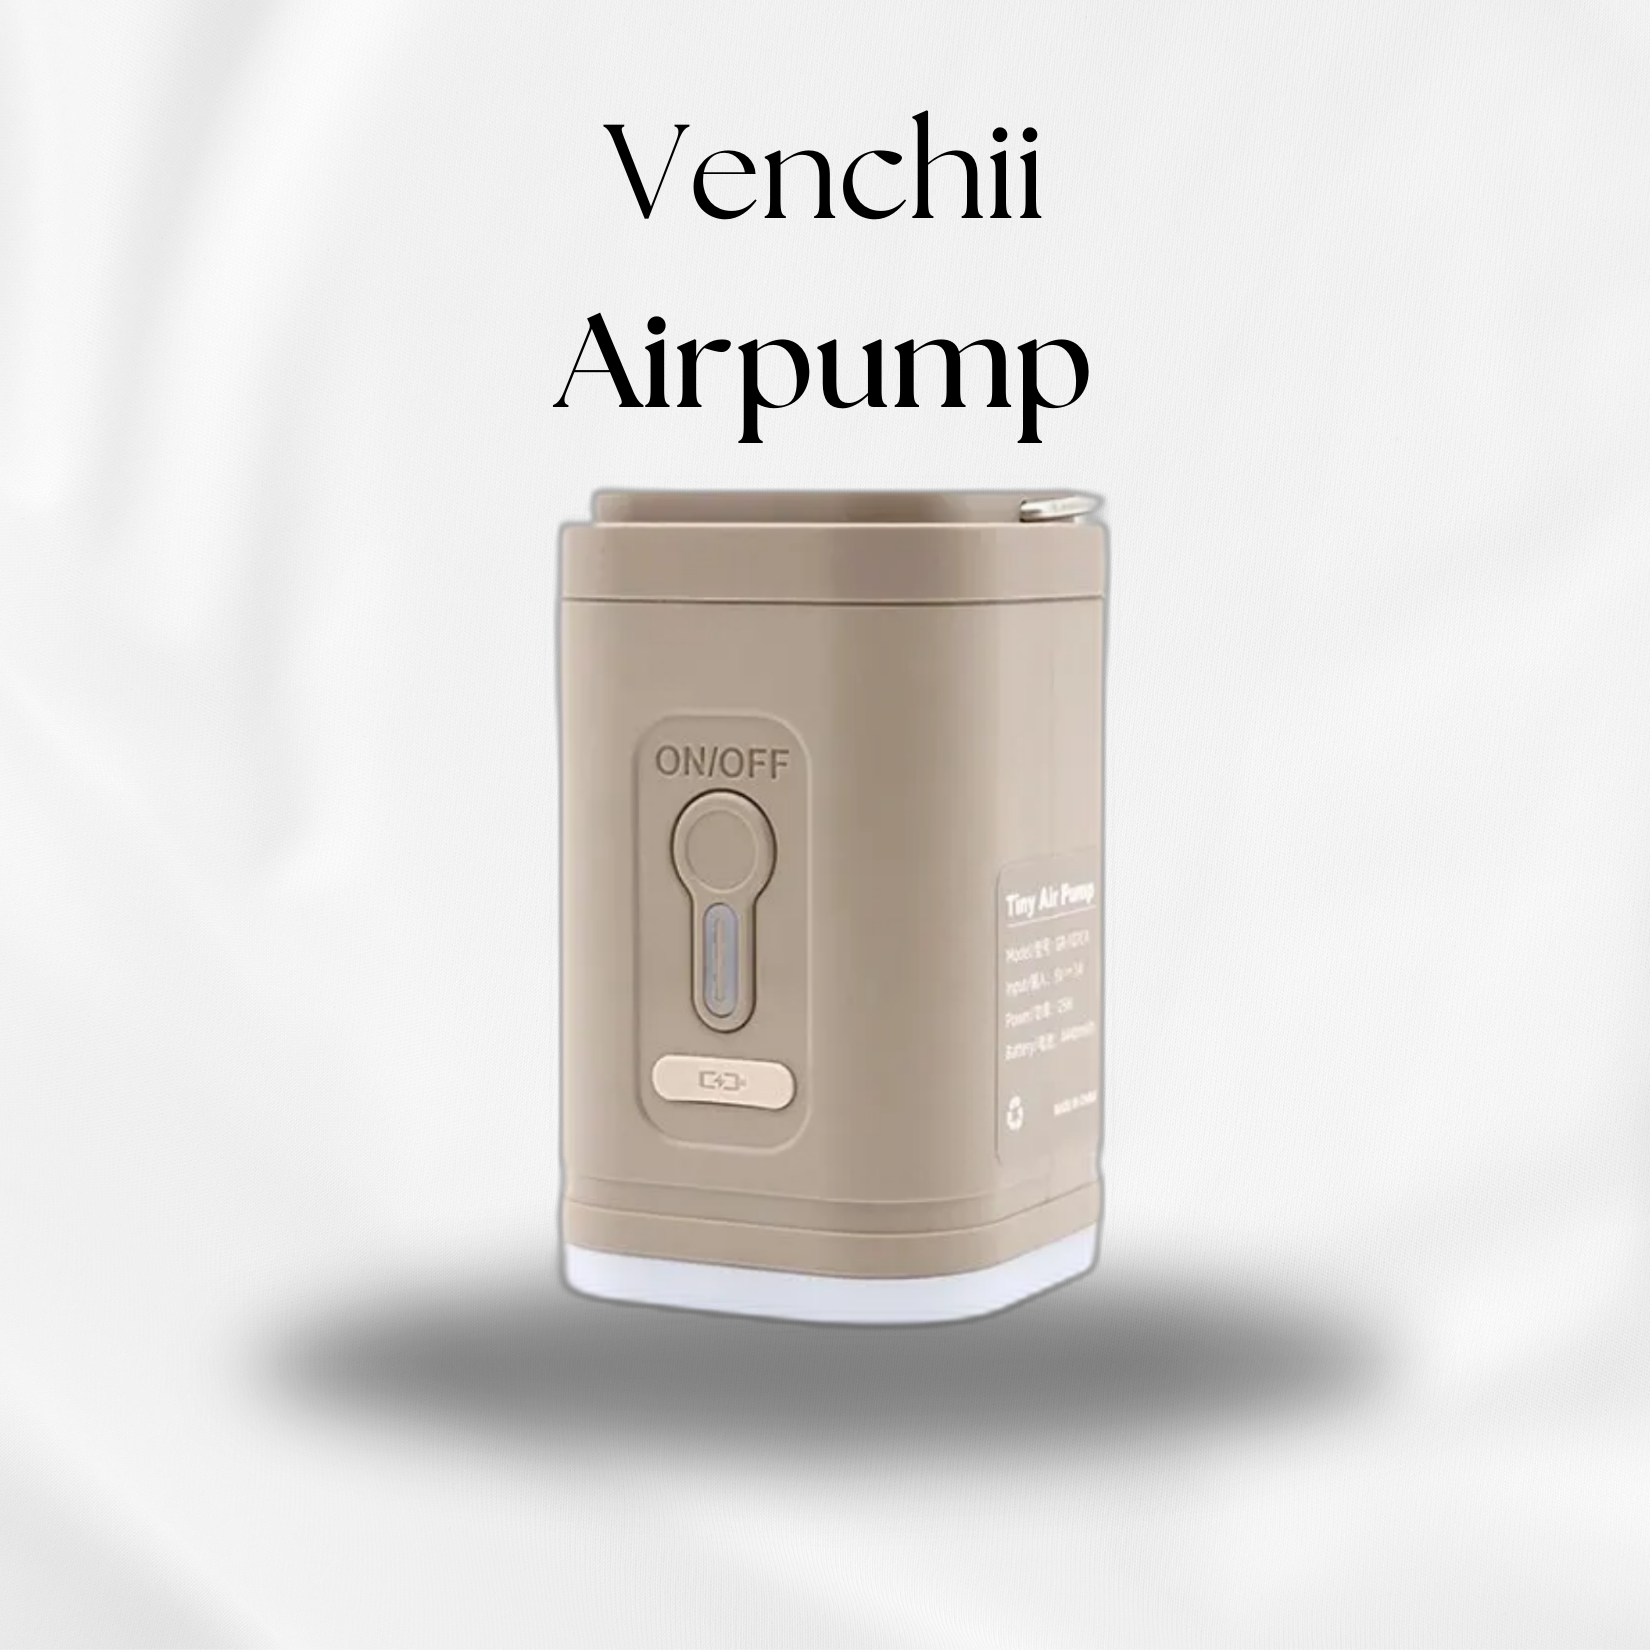 Venchii Airpump